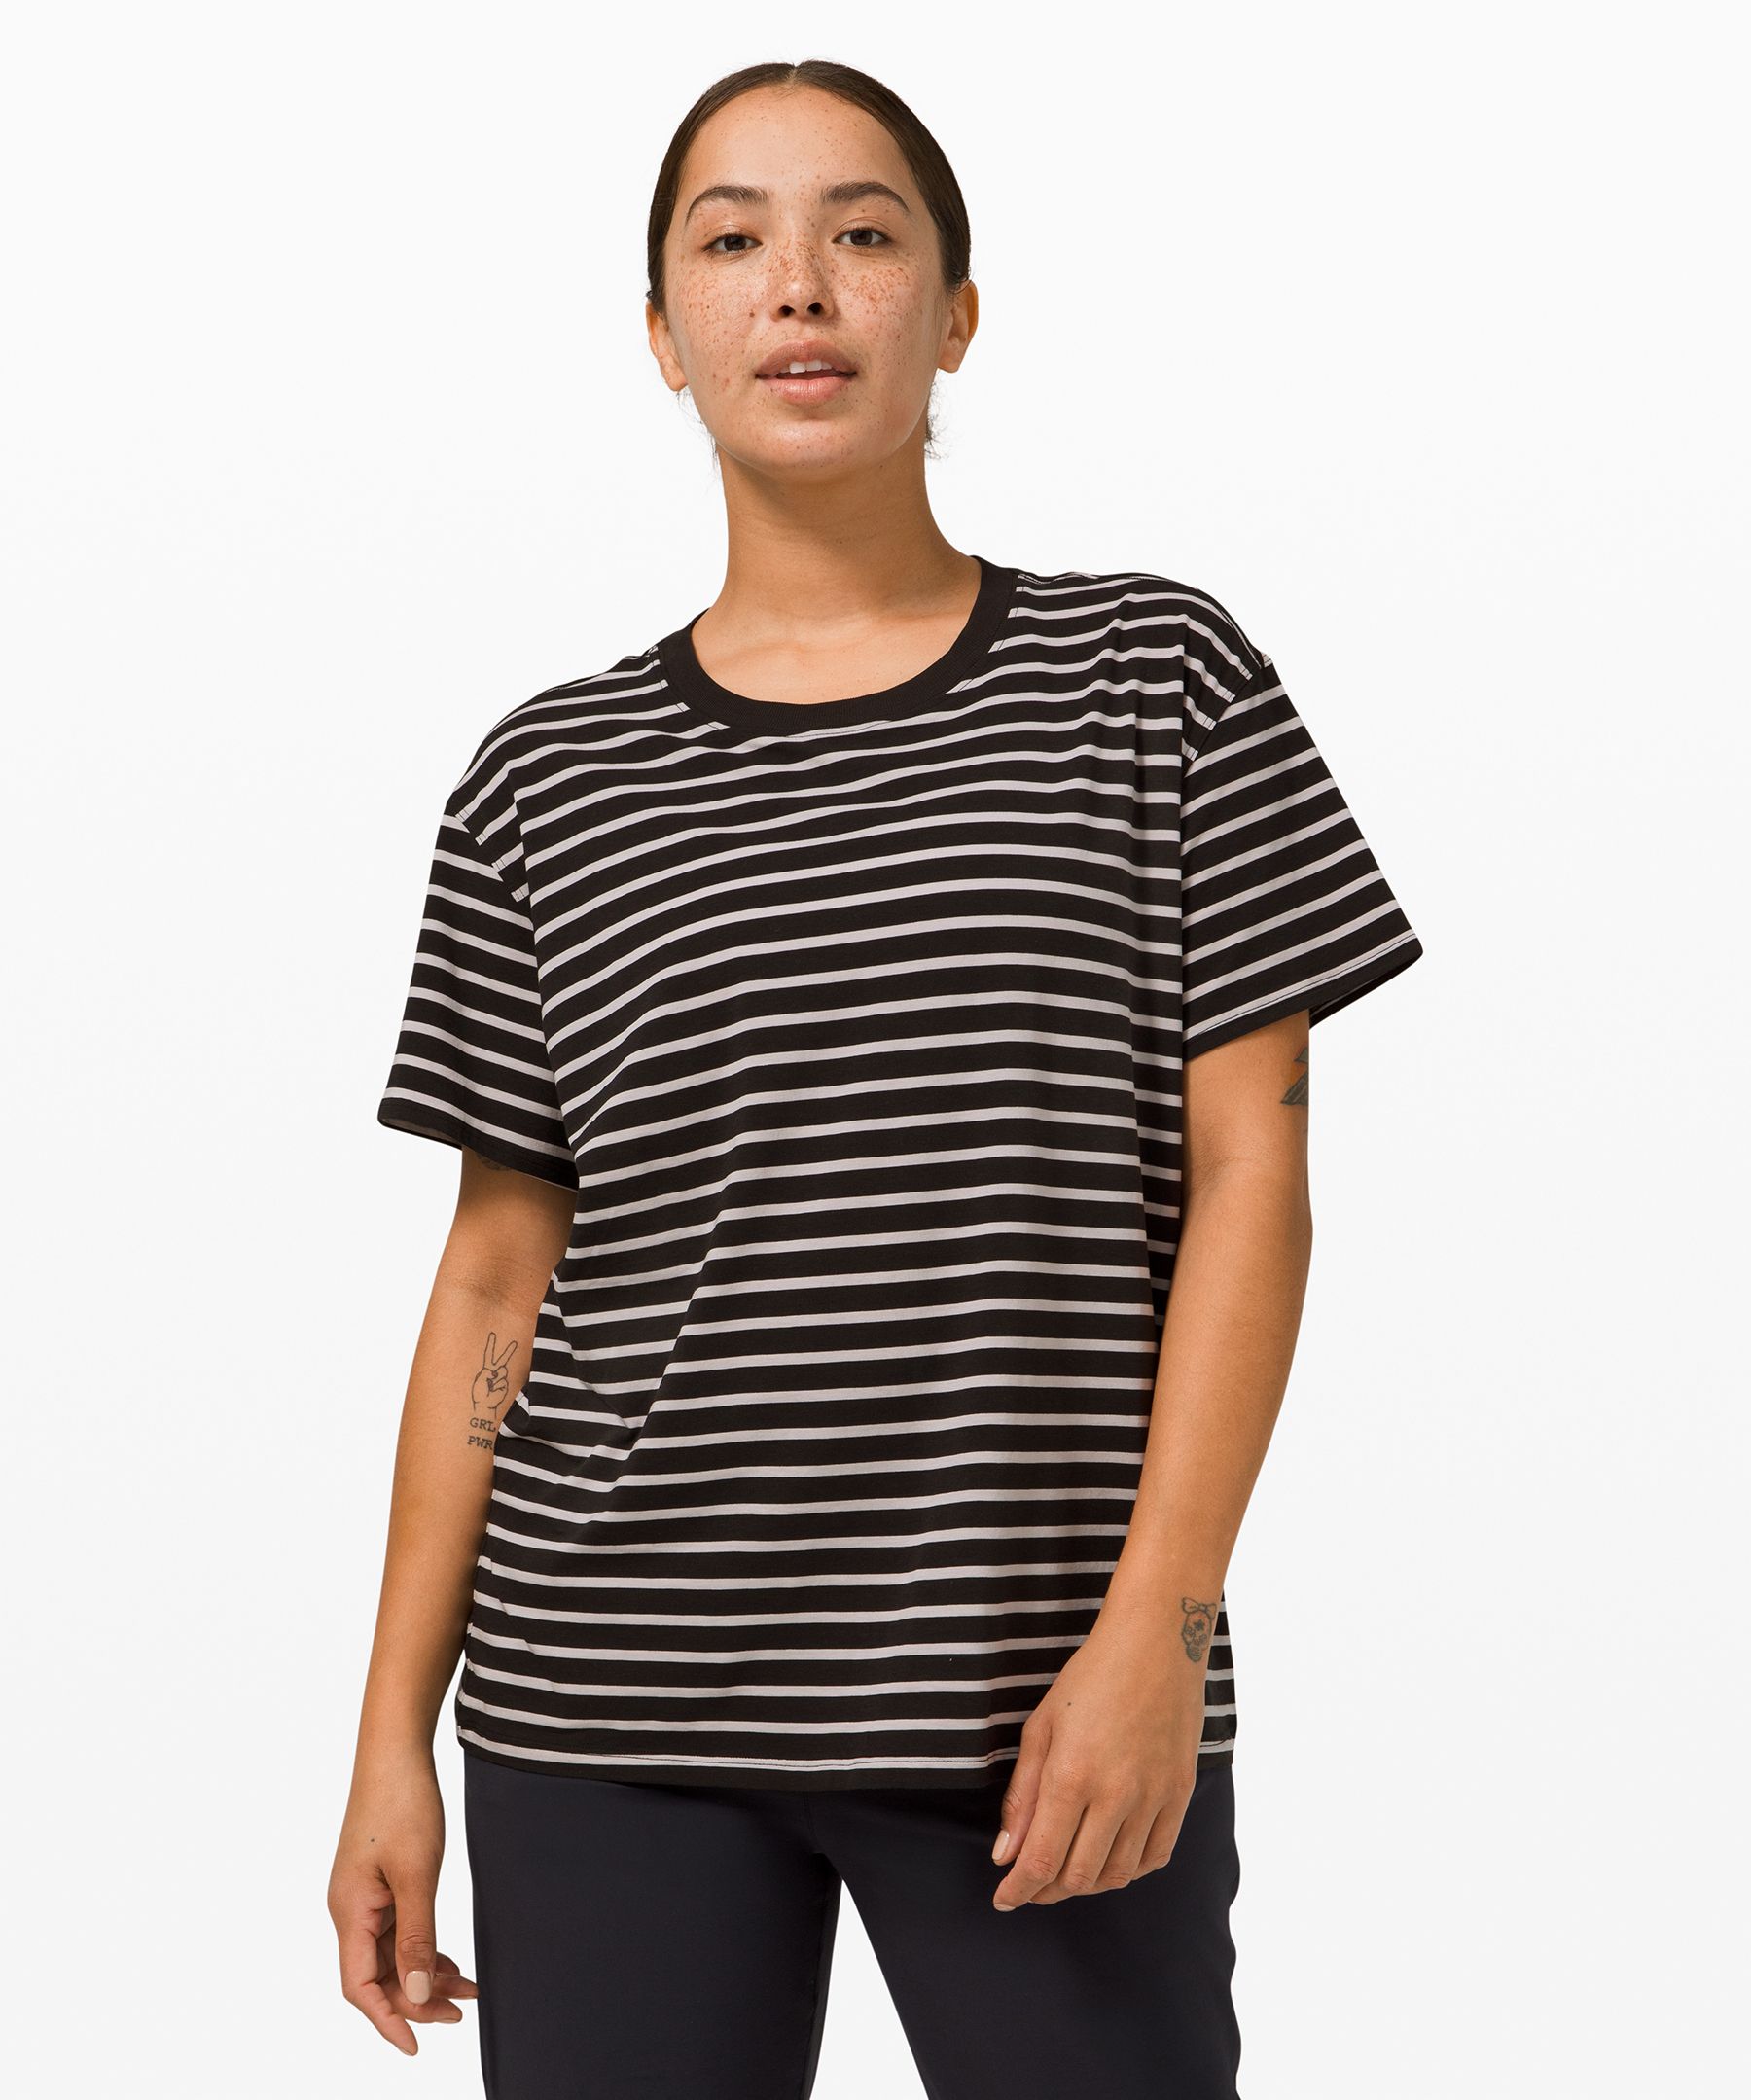 lululemon striped shirt